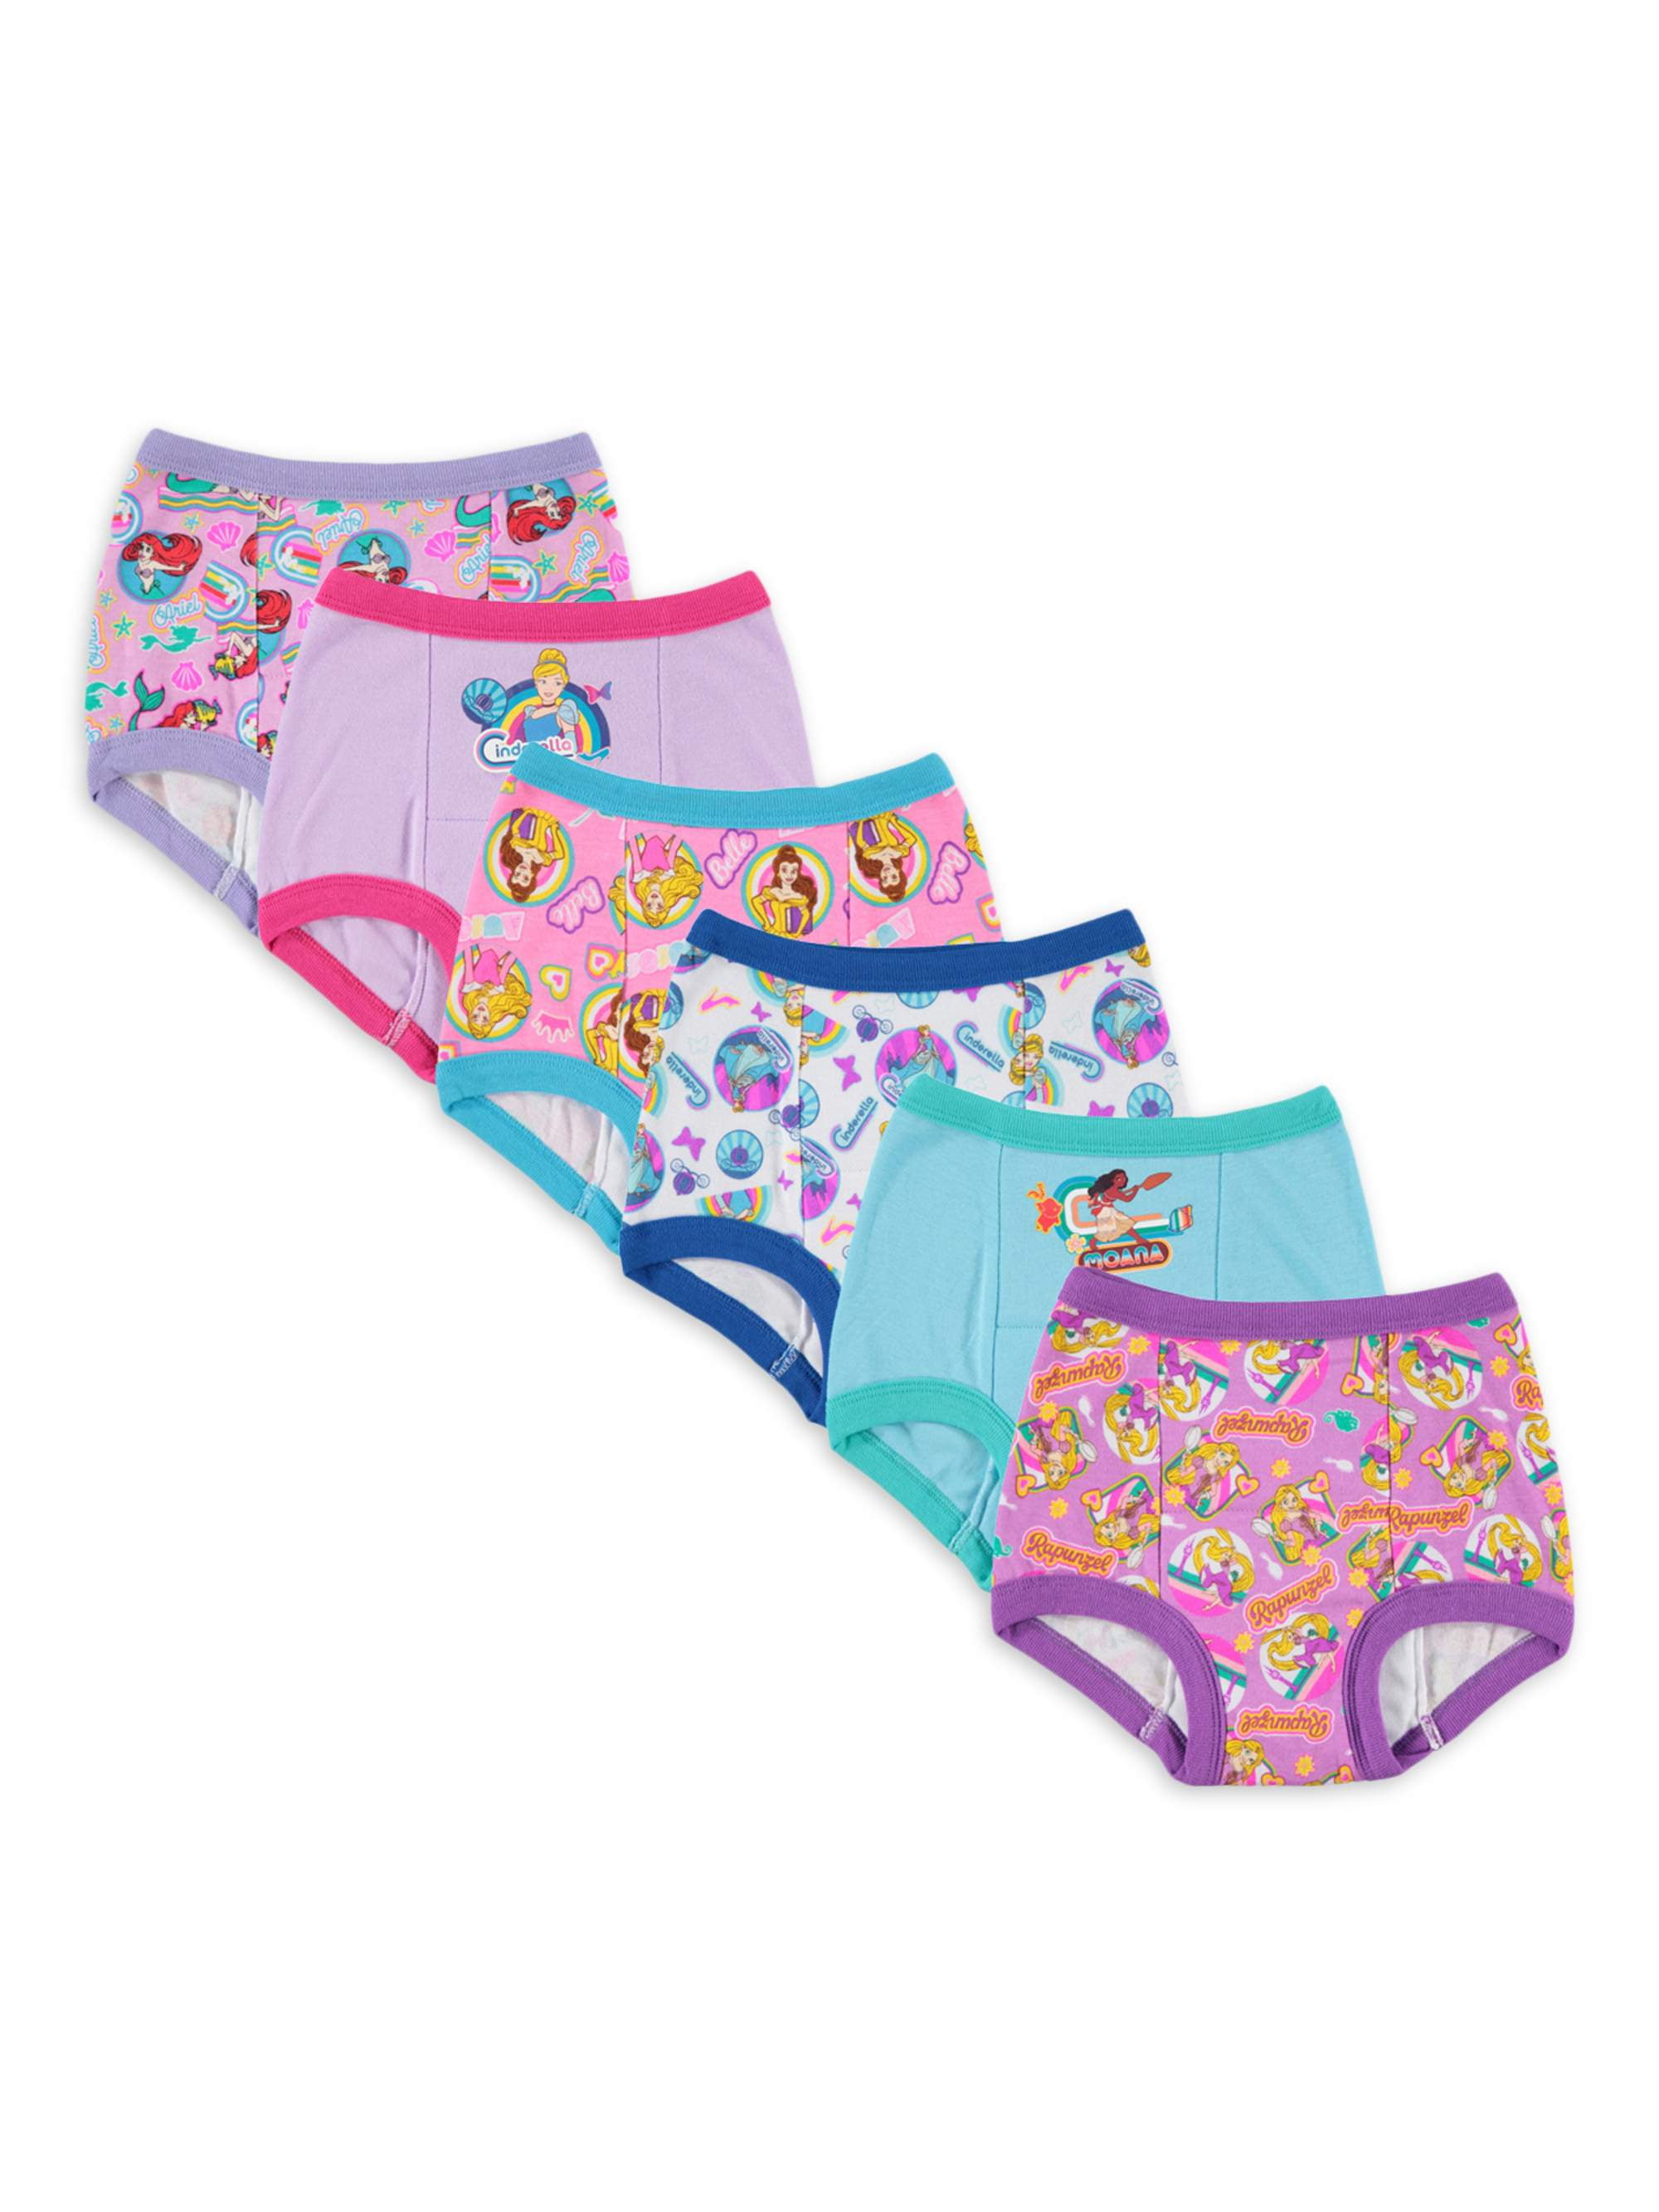 Disney Princess Toddler Girls' Training Pants, 6 Pack - Walmart.com